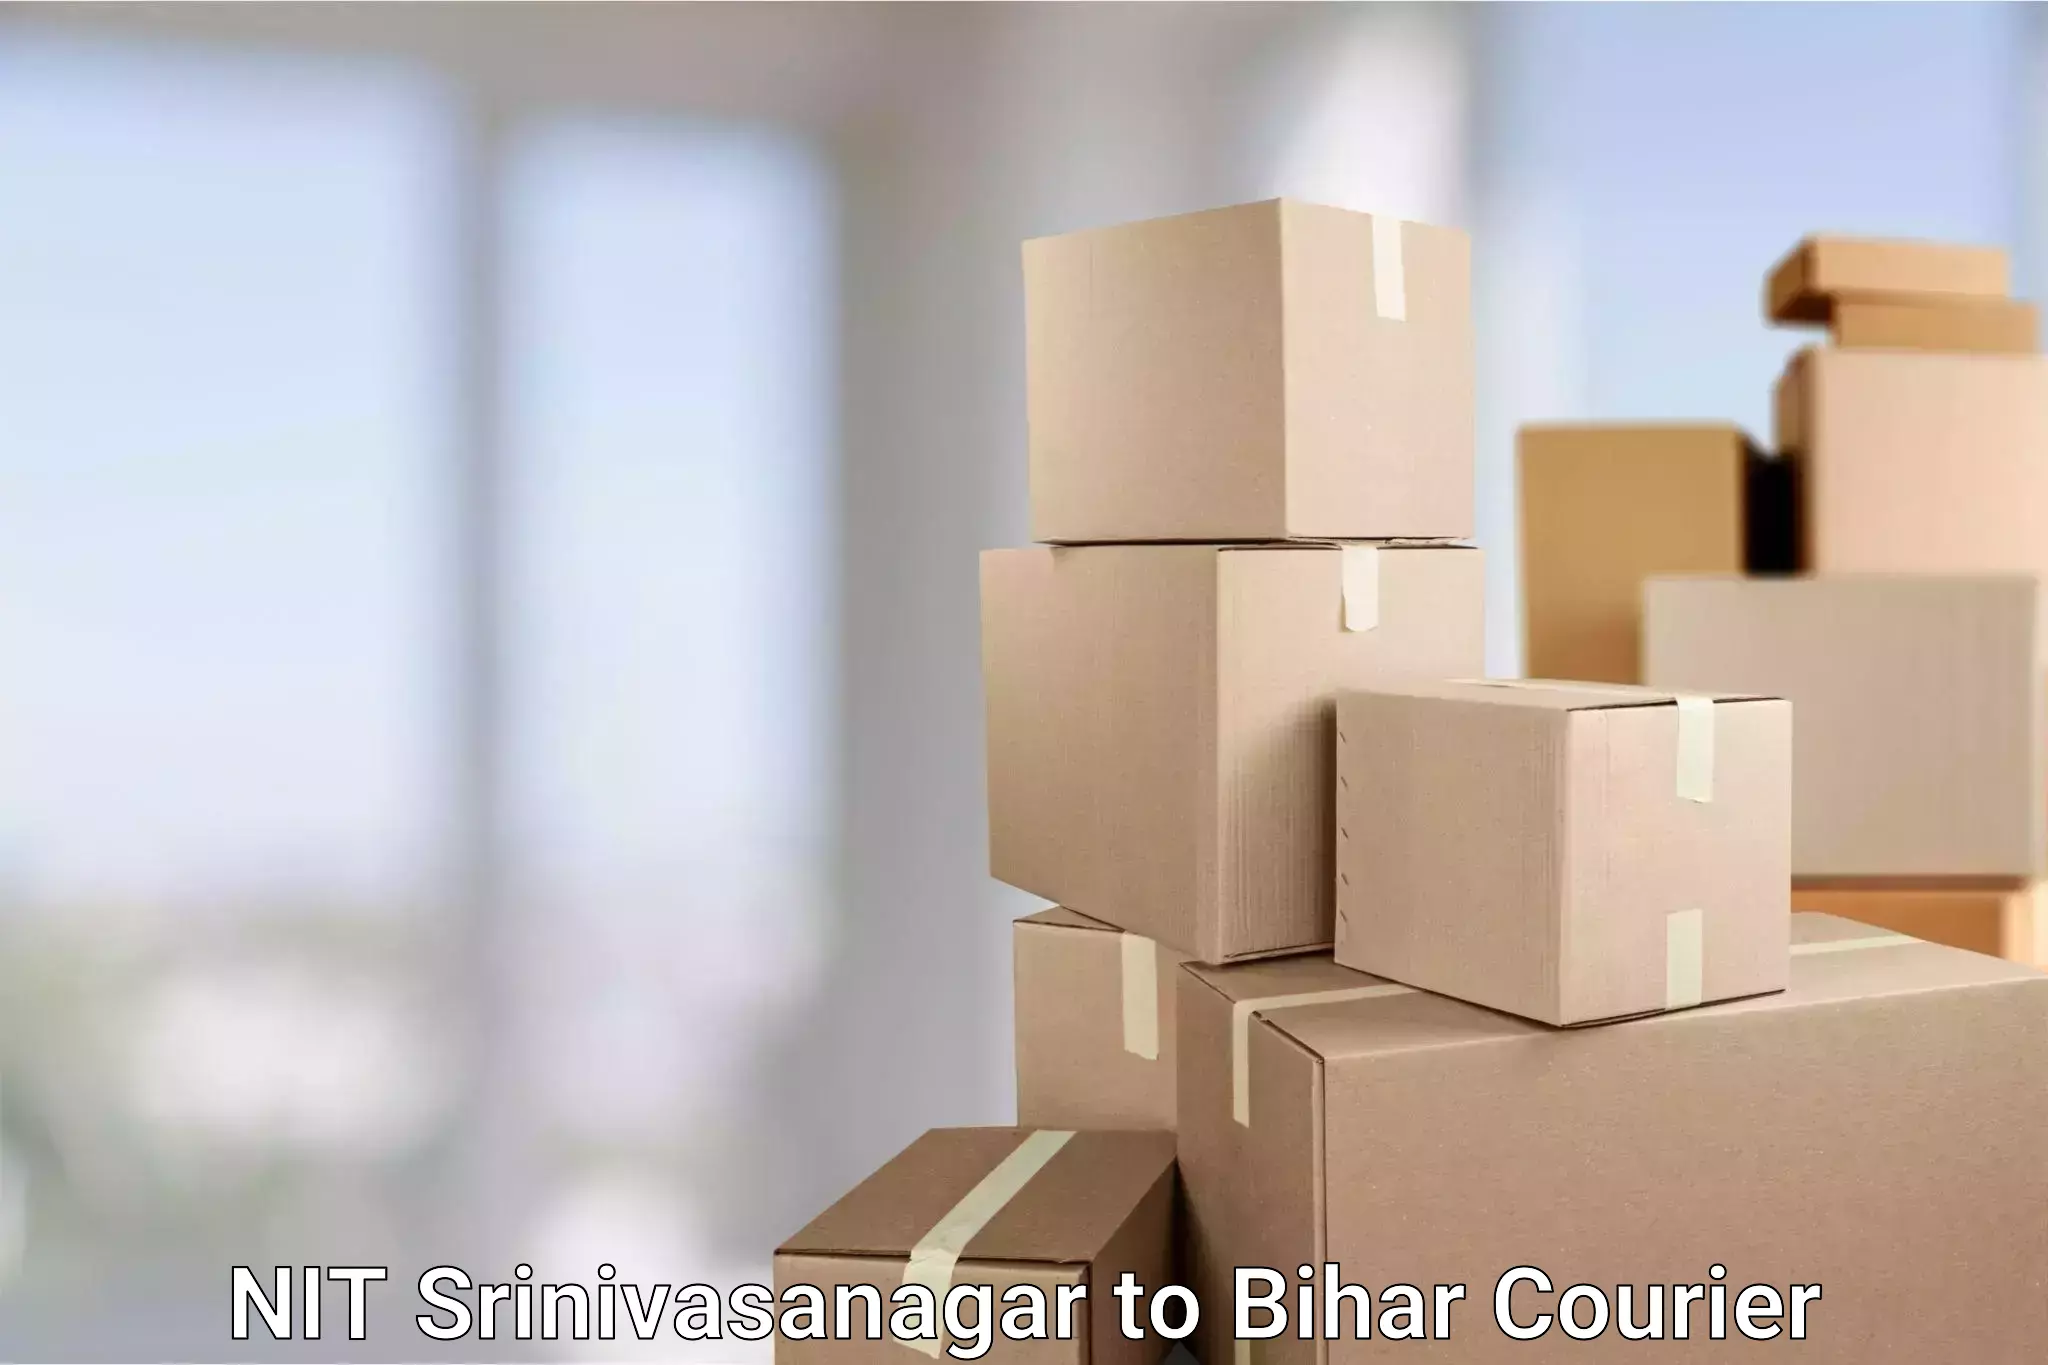 Same-day delivery options NIT Srinivasanagar to Aurangabad Bihar